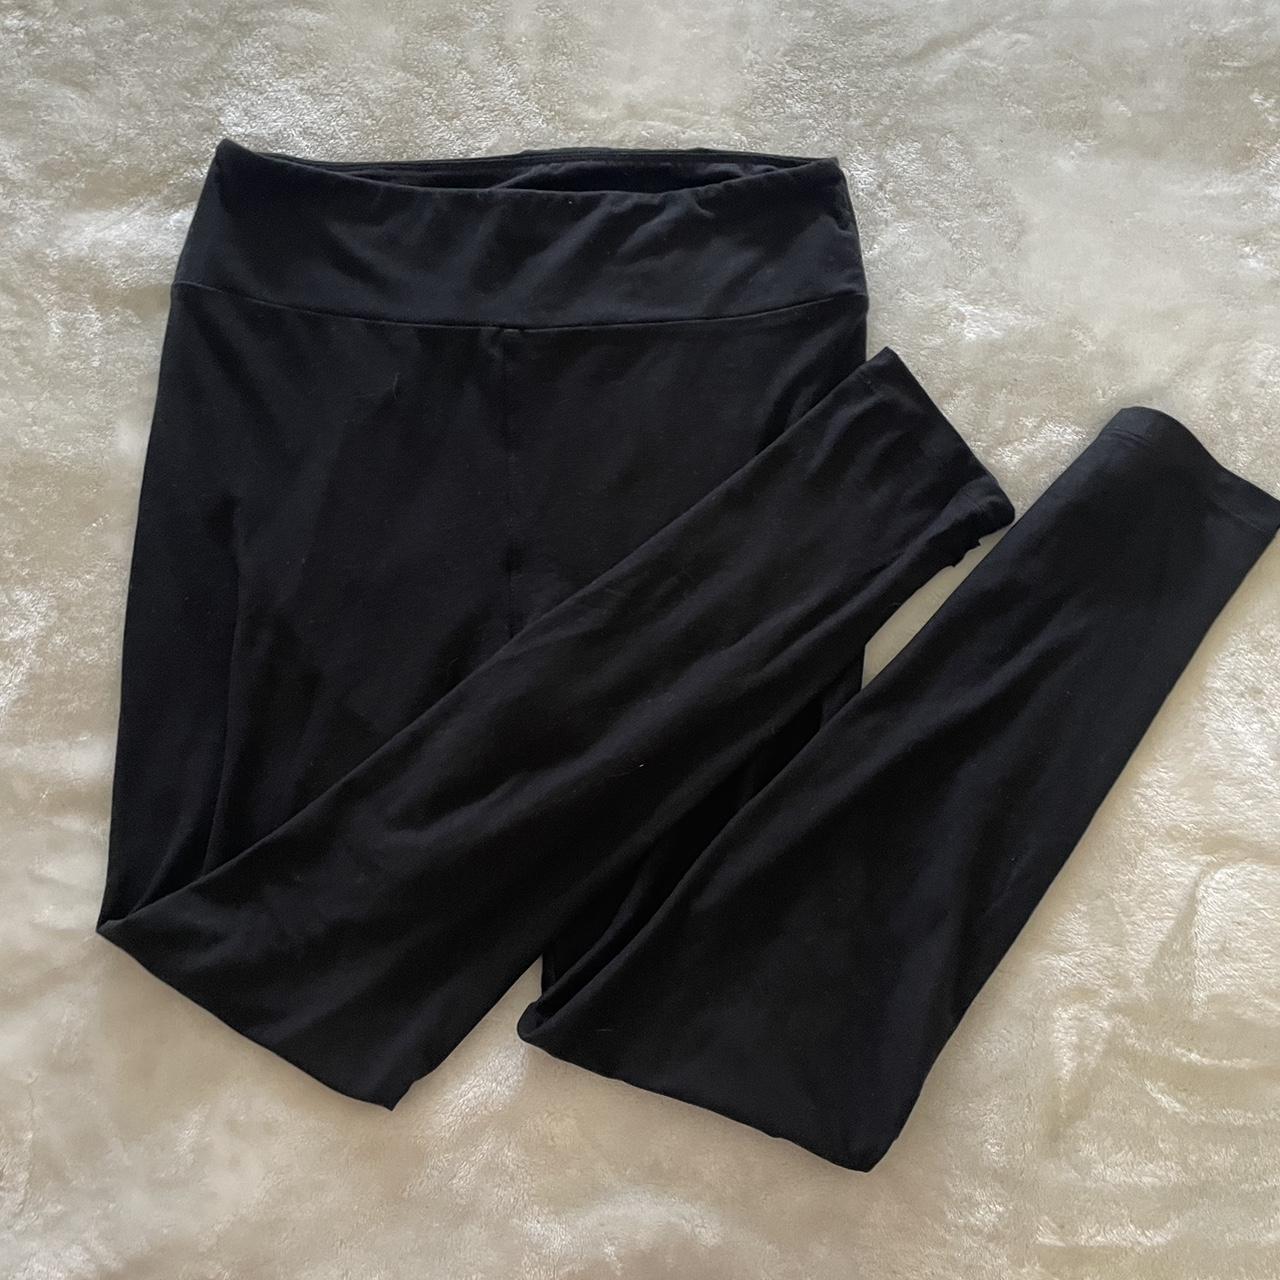 Lularoe black leggings one size stretchy - Depop